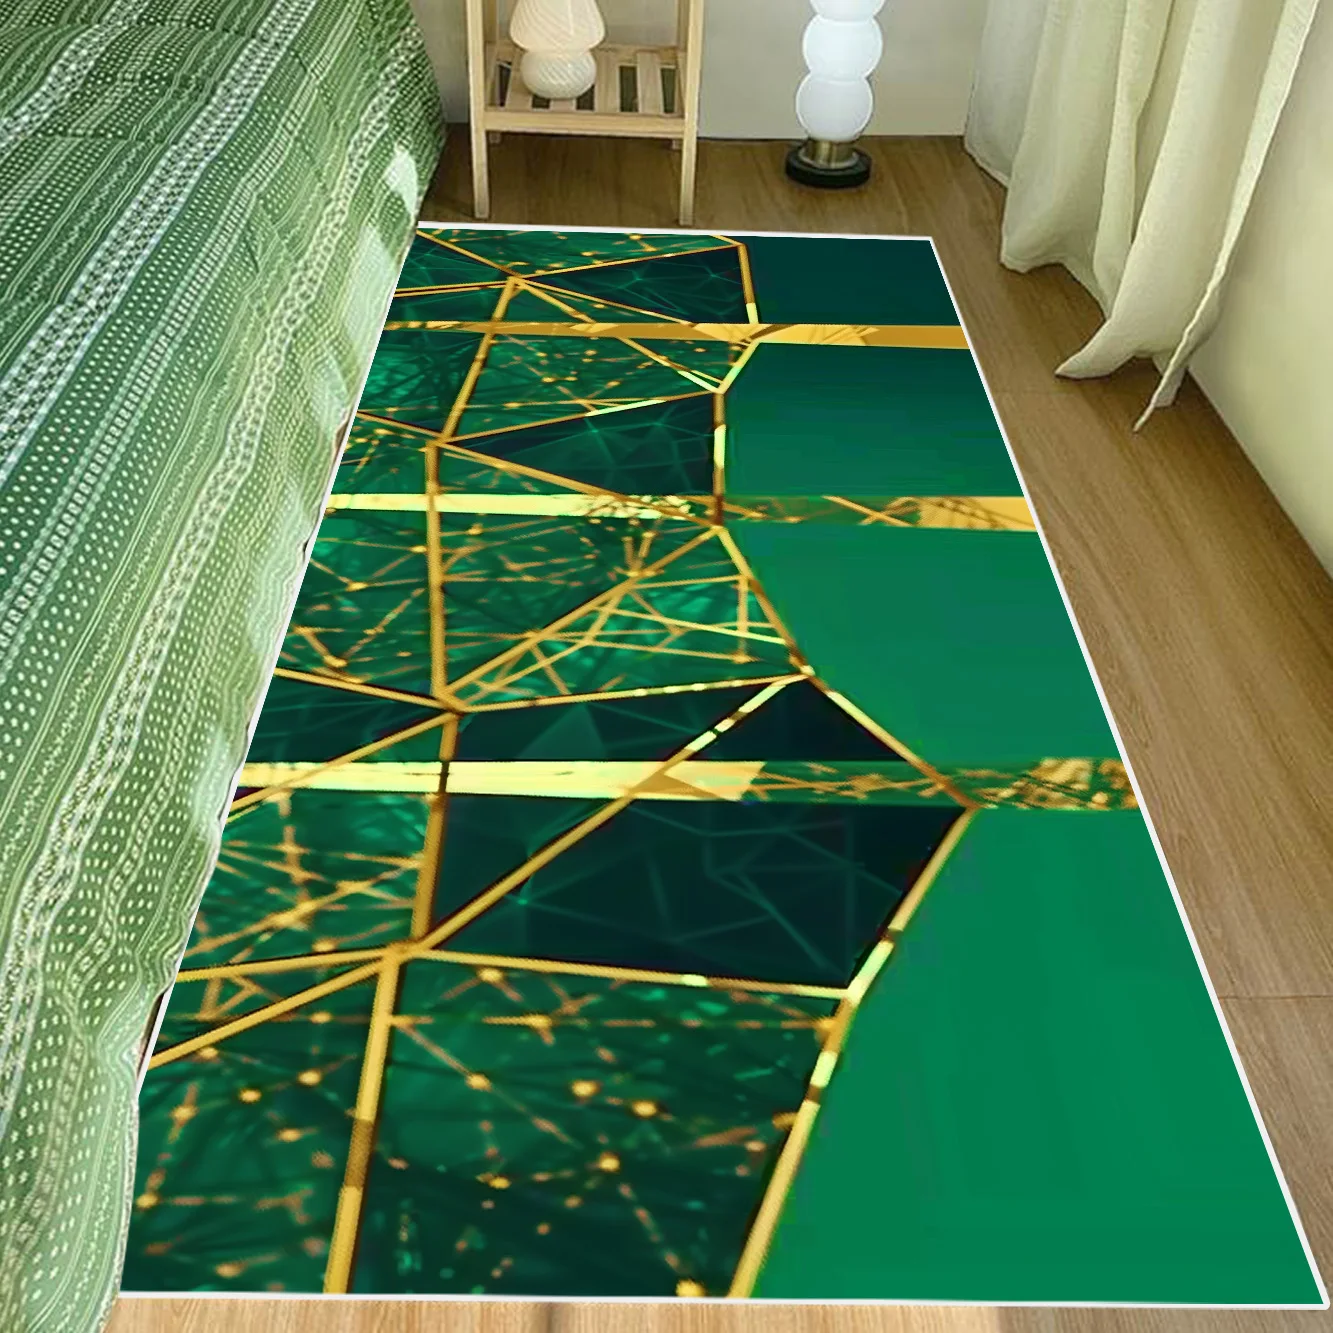 

Green Geometry Carpets for Bedside Fluffy Soft Home Bedroom Non-Slip Long Floor Mat Kitchen Bathroom Balcony Corridor Decor Rugs